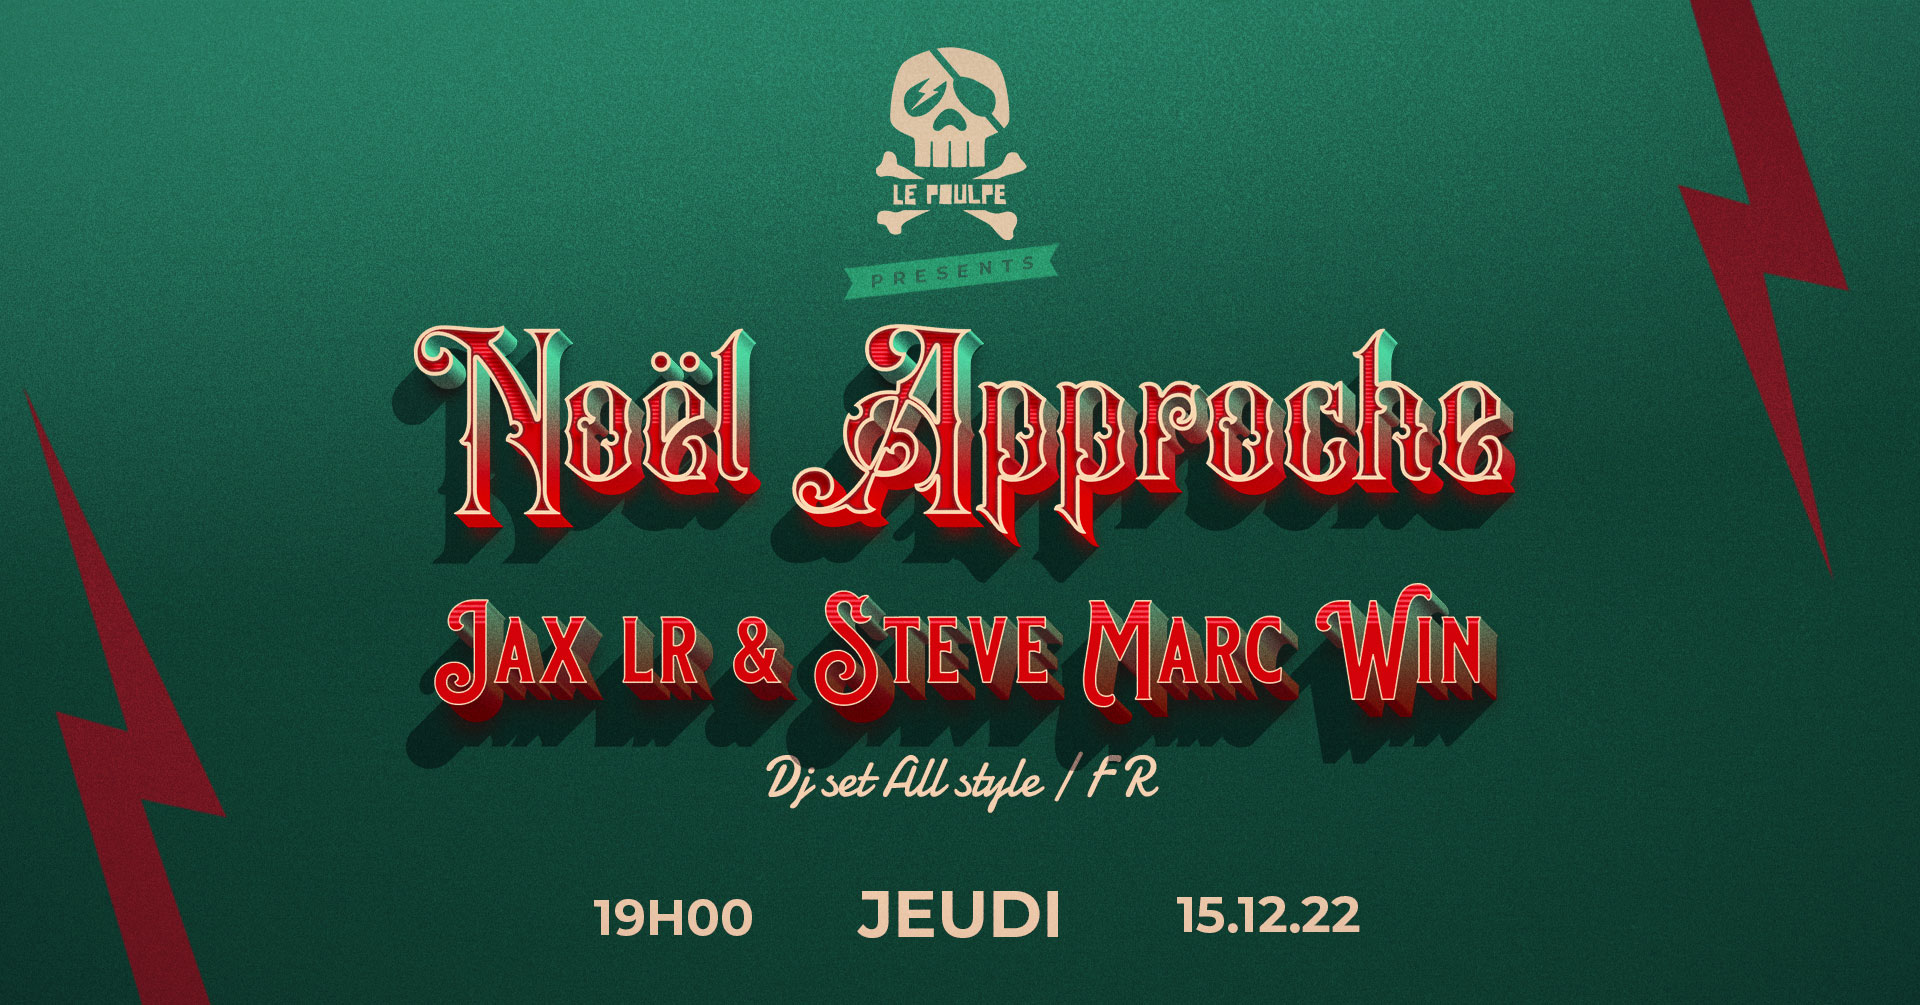 Noël approche Jax Lr & Steve Marc Win (Dj Fête) @ Le Poulpe!